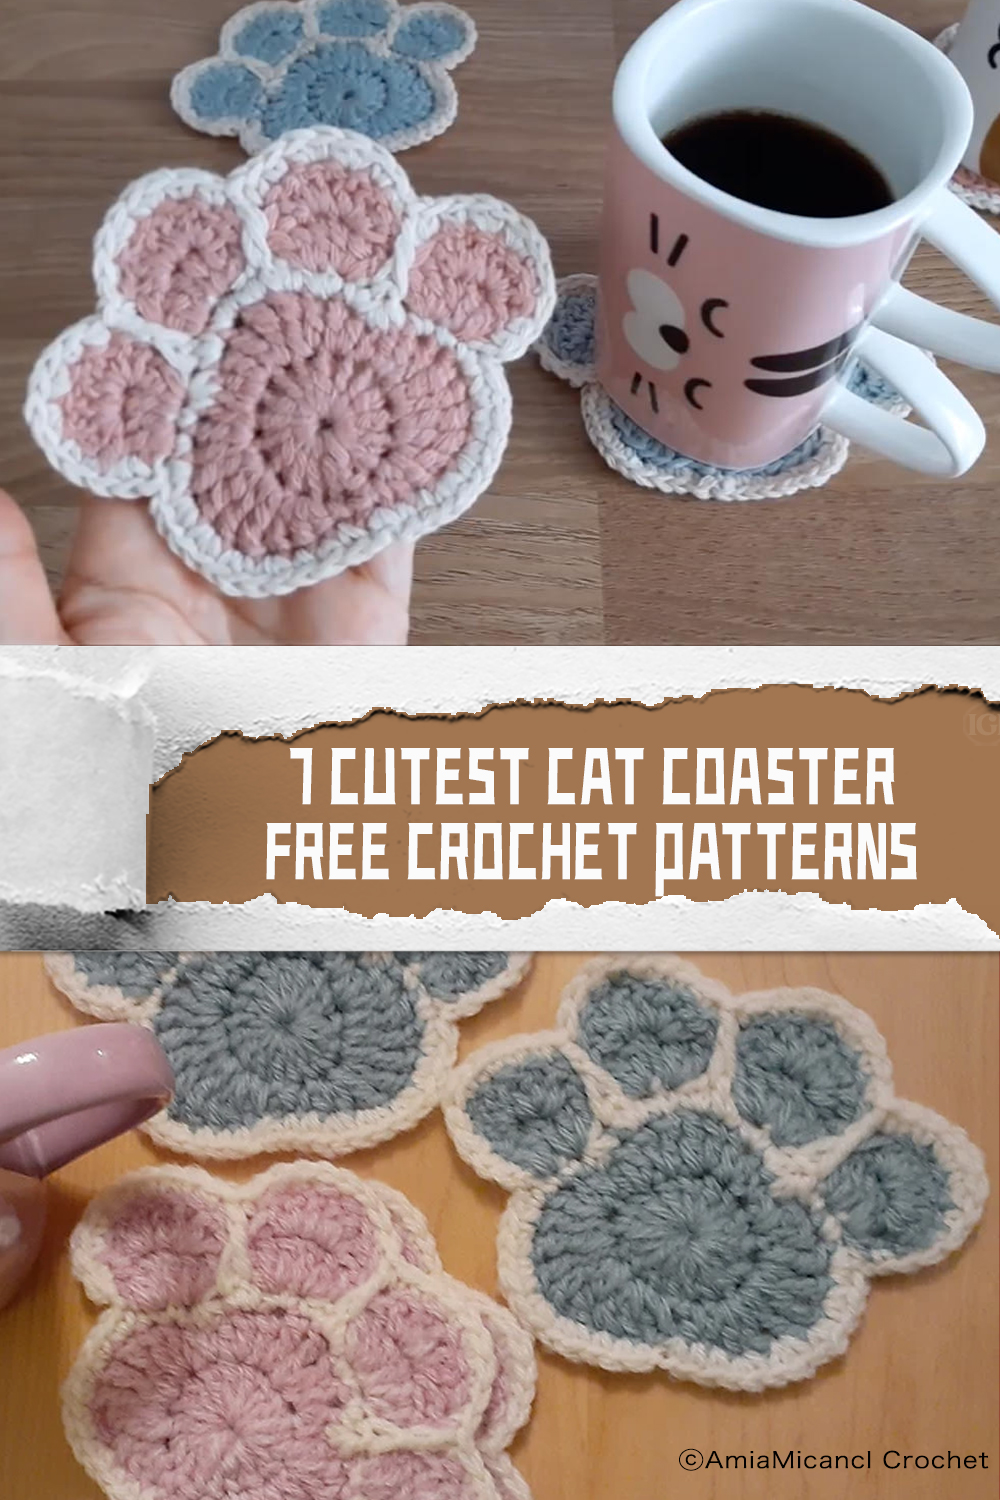 7-Cutest-Cat-Coaster-FREE-Crochet-Patterns